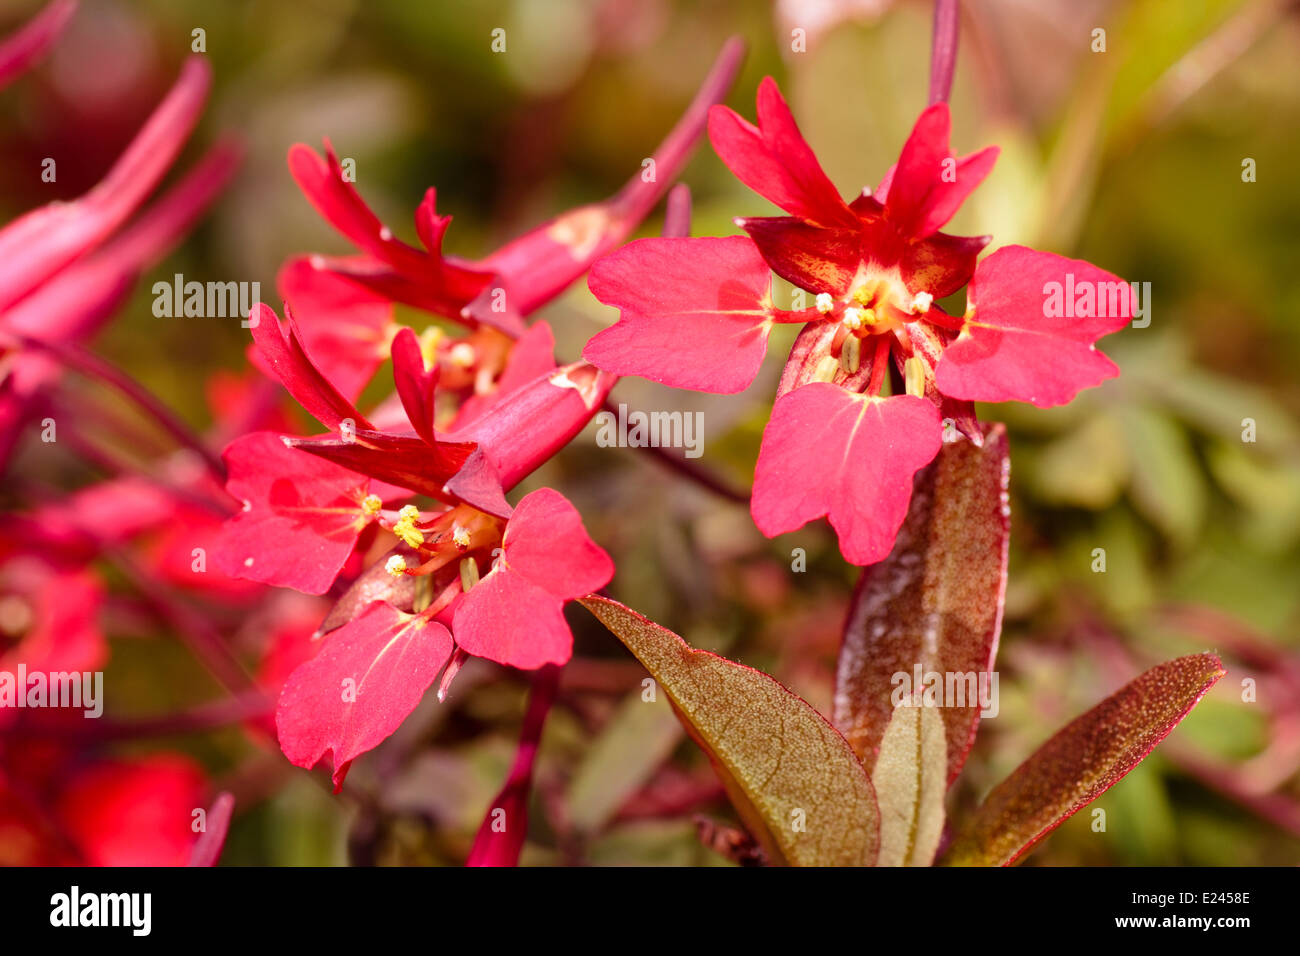 Scarlet flowers of the Scottish flame flower, Tropaeolum speciosum Stock Photo